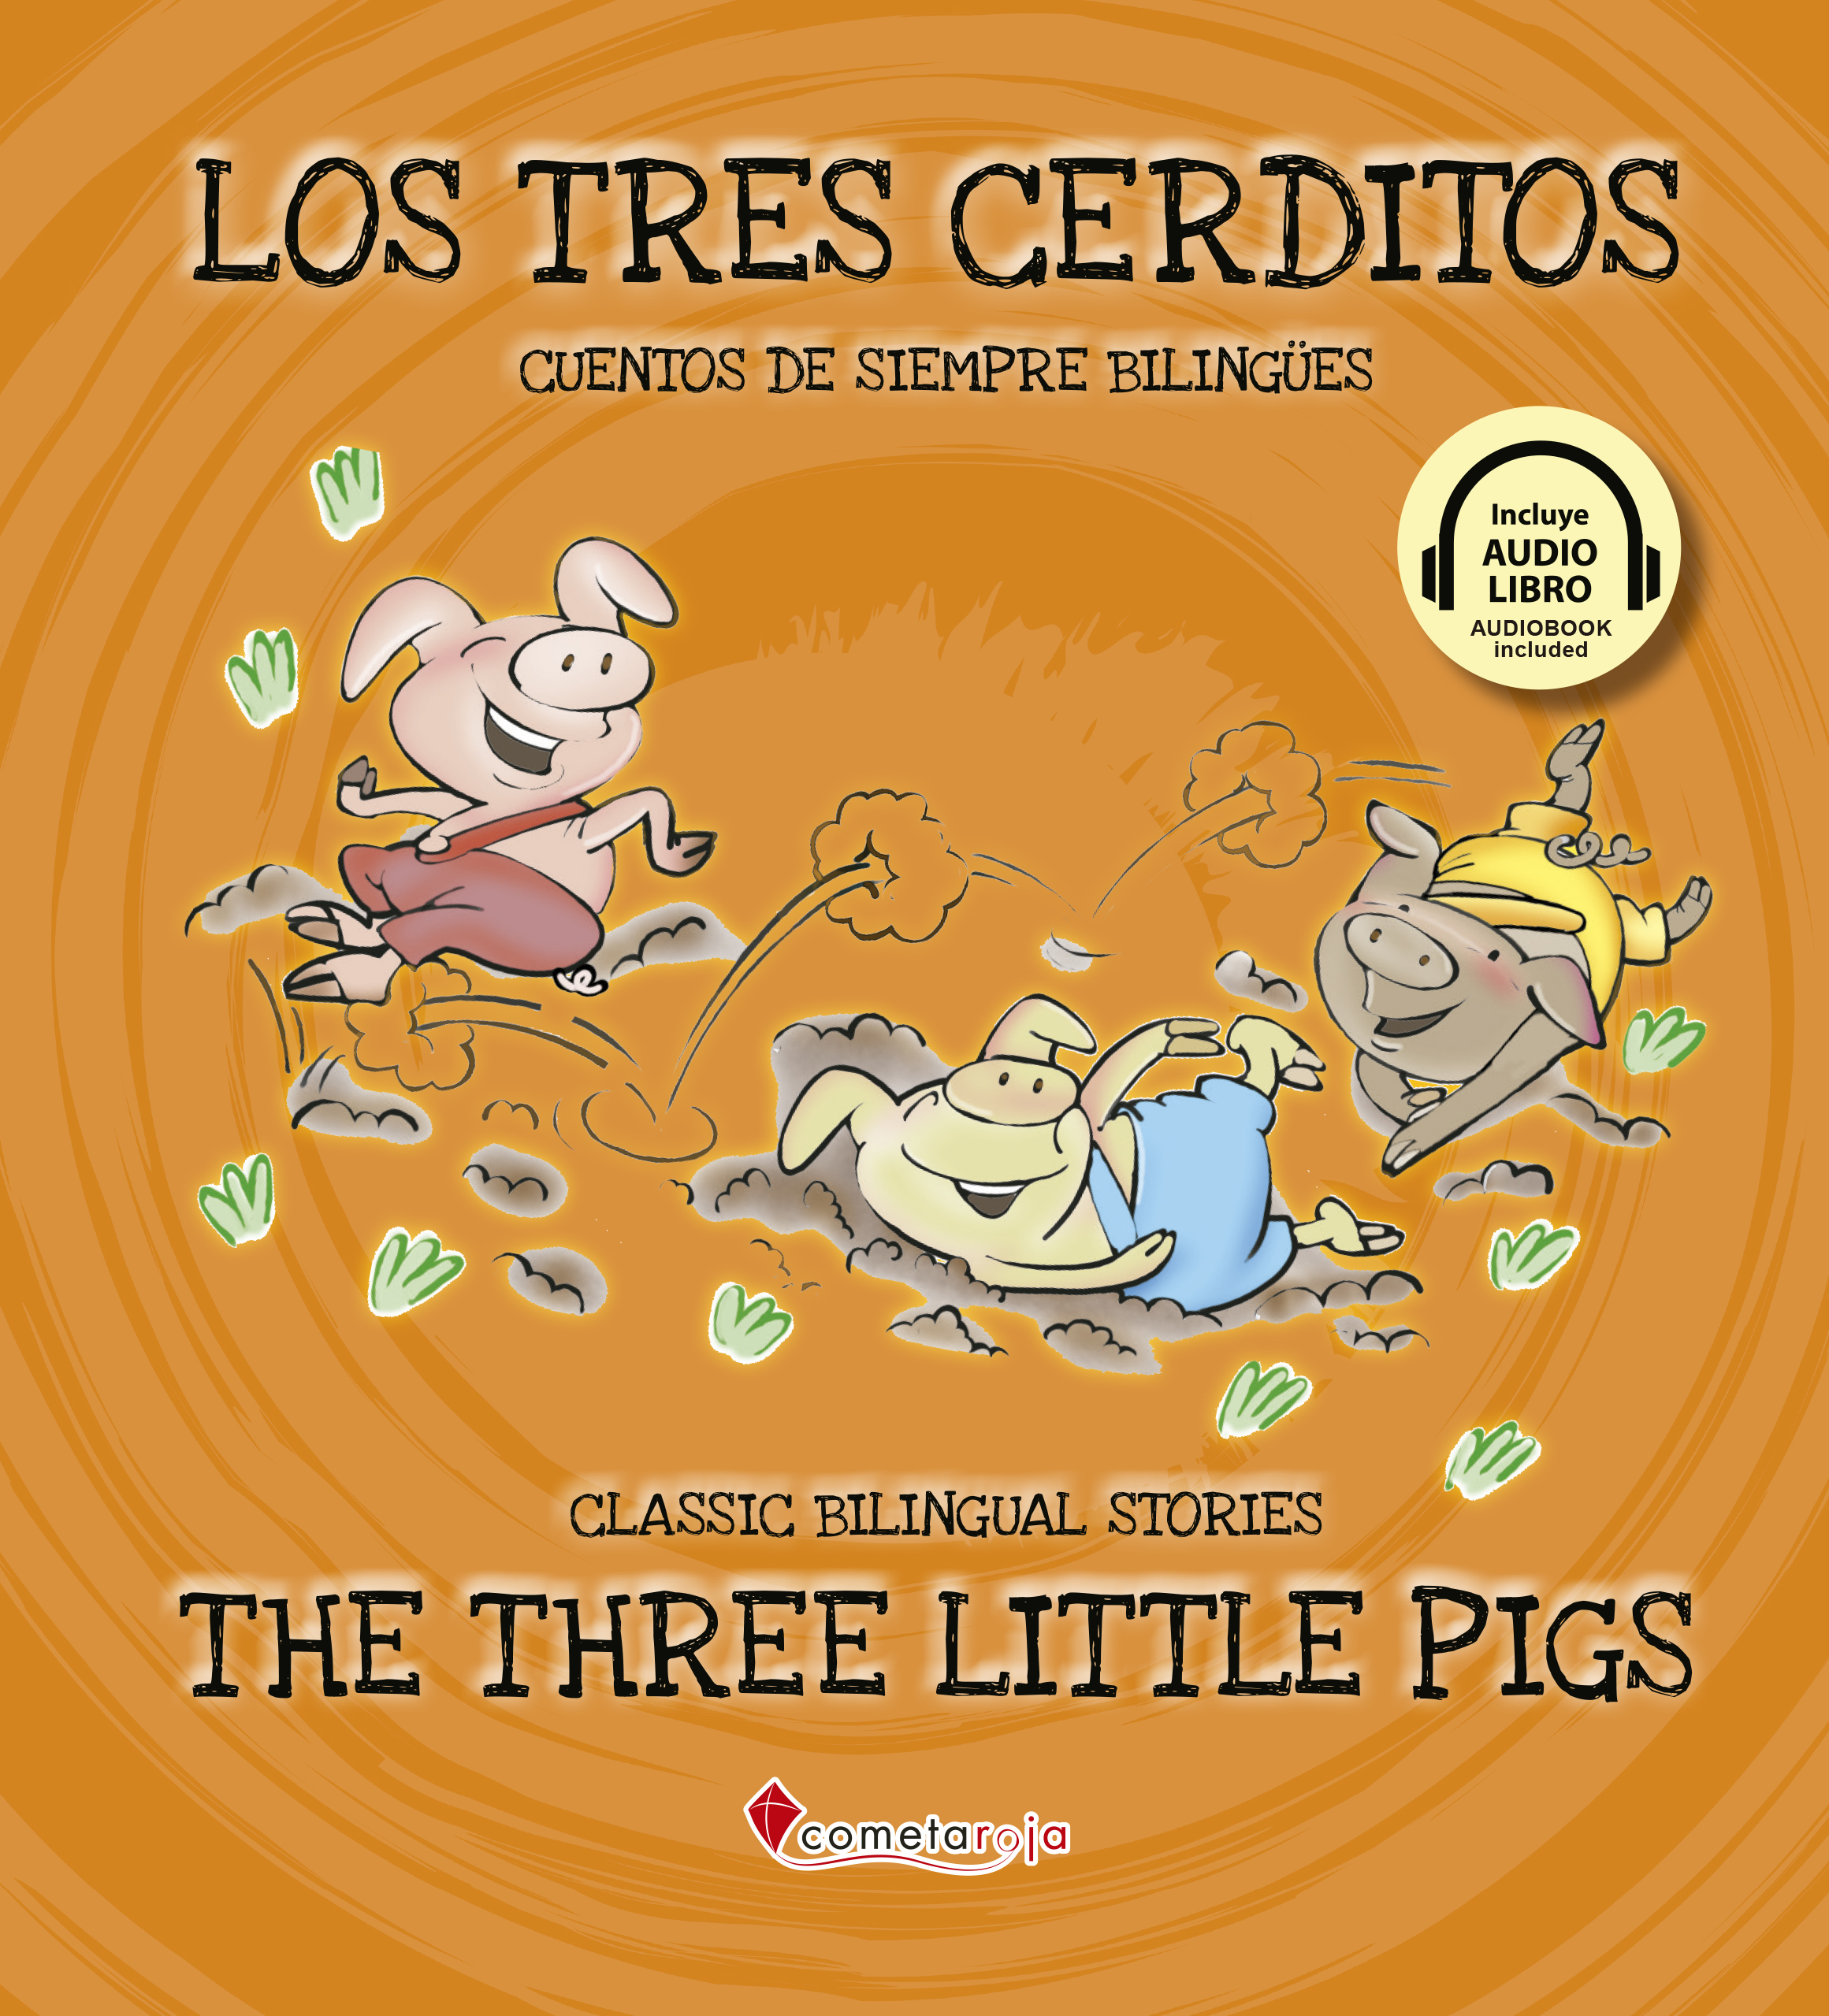 Los tres cerditos / The three little pigs